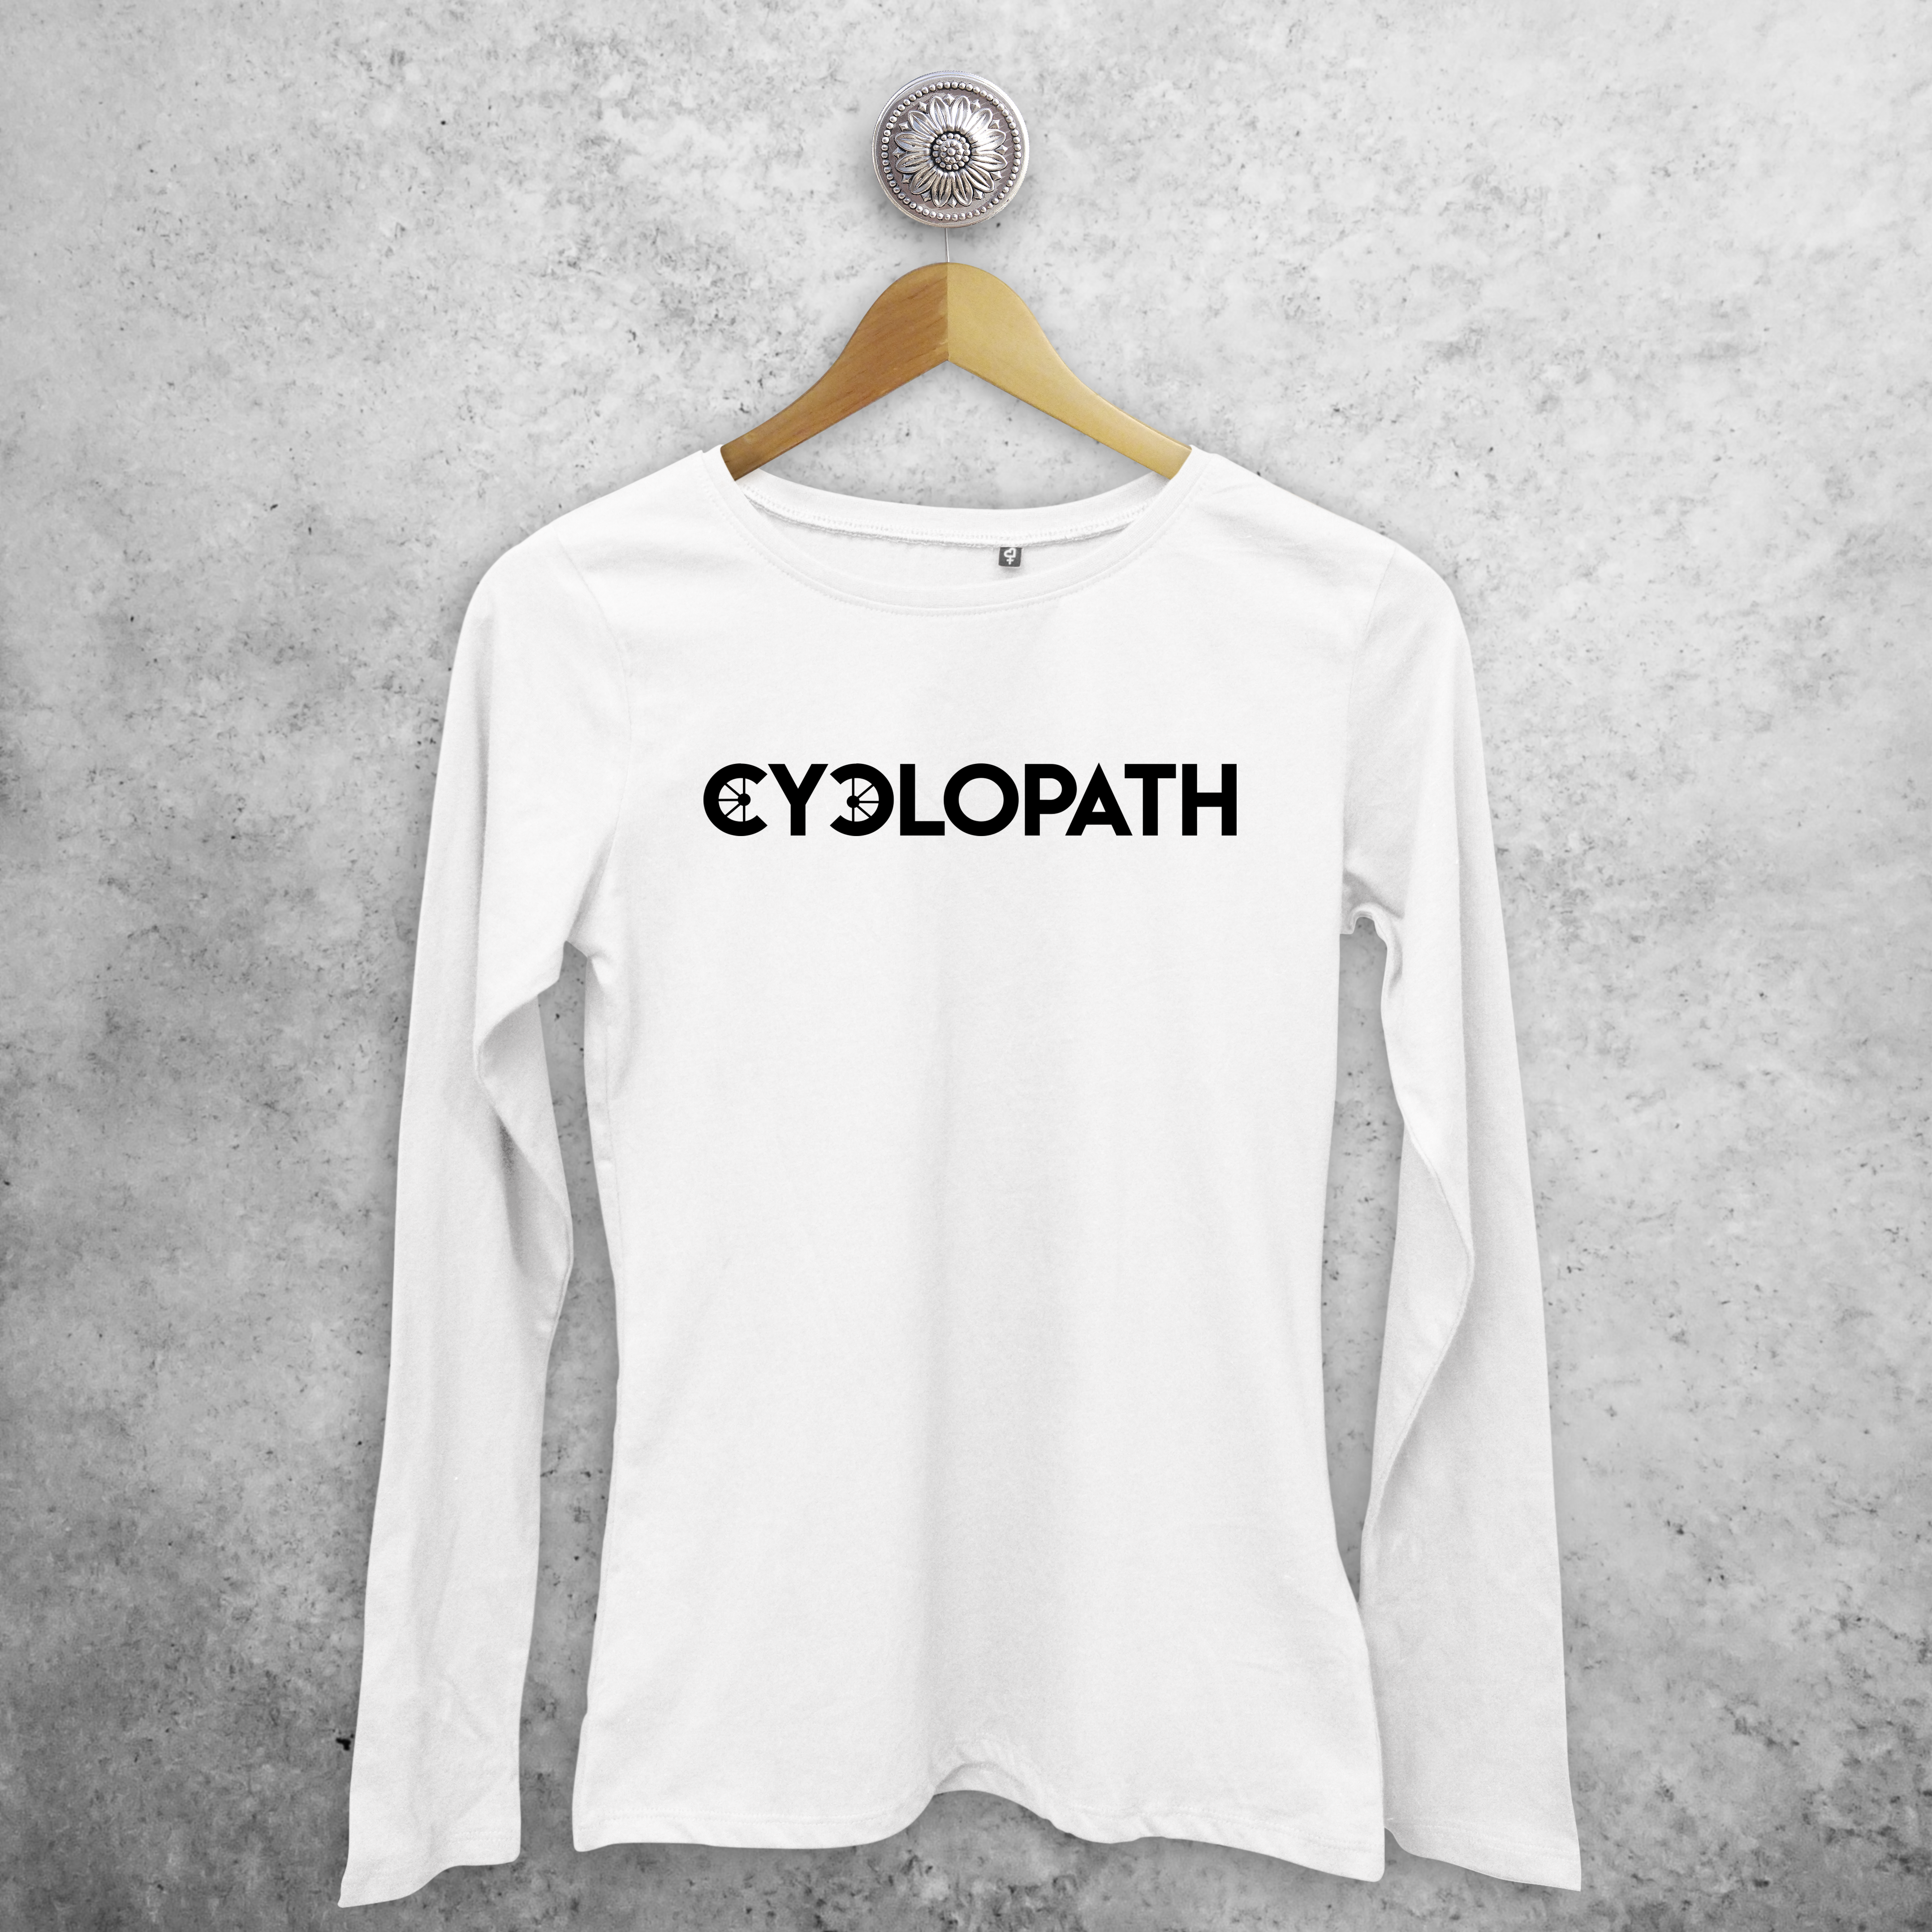 'Cyclopath' adult longsleeve shirt